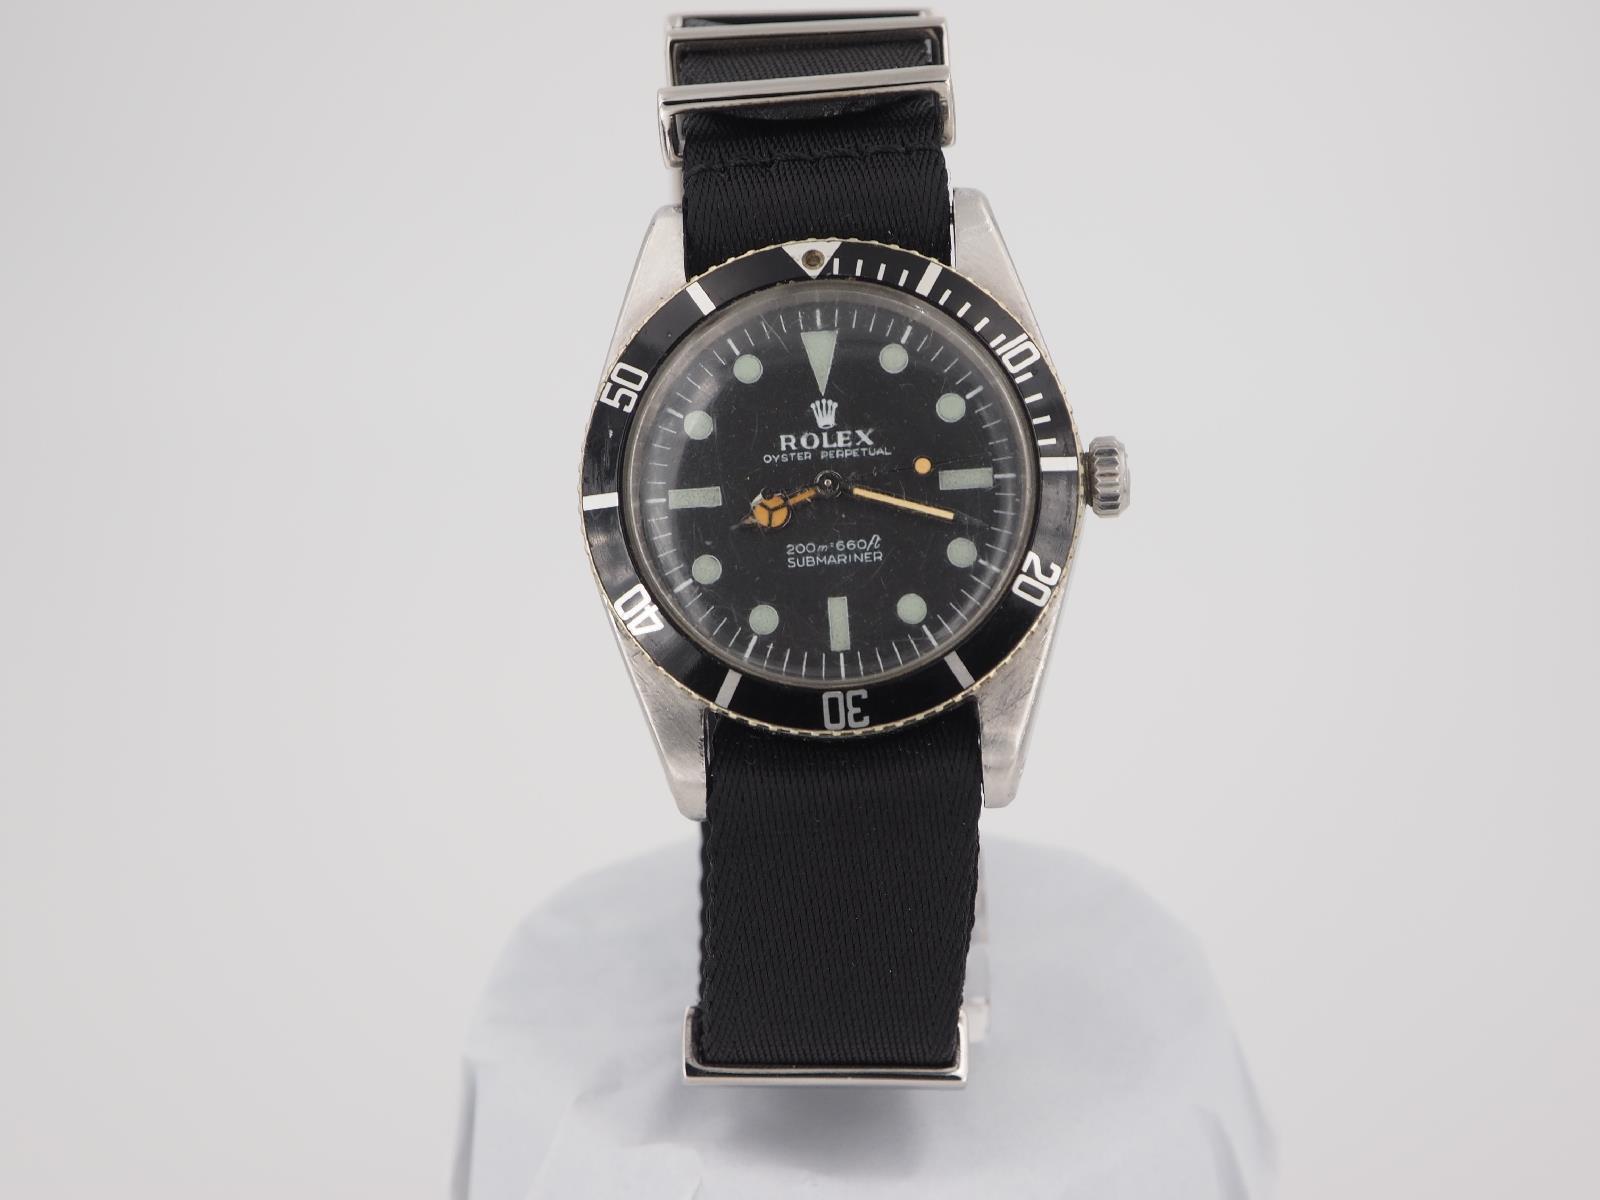 Rolex Submariner 5508 James Bond